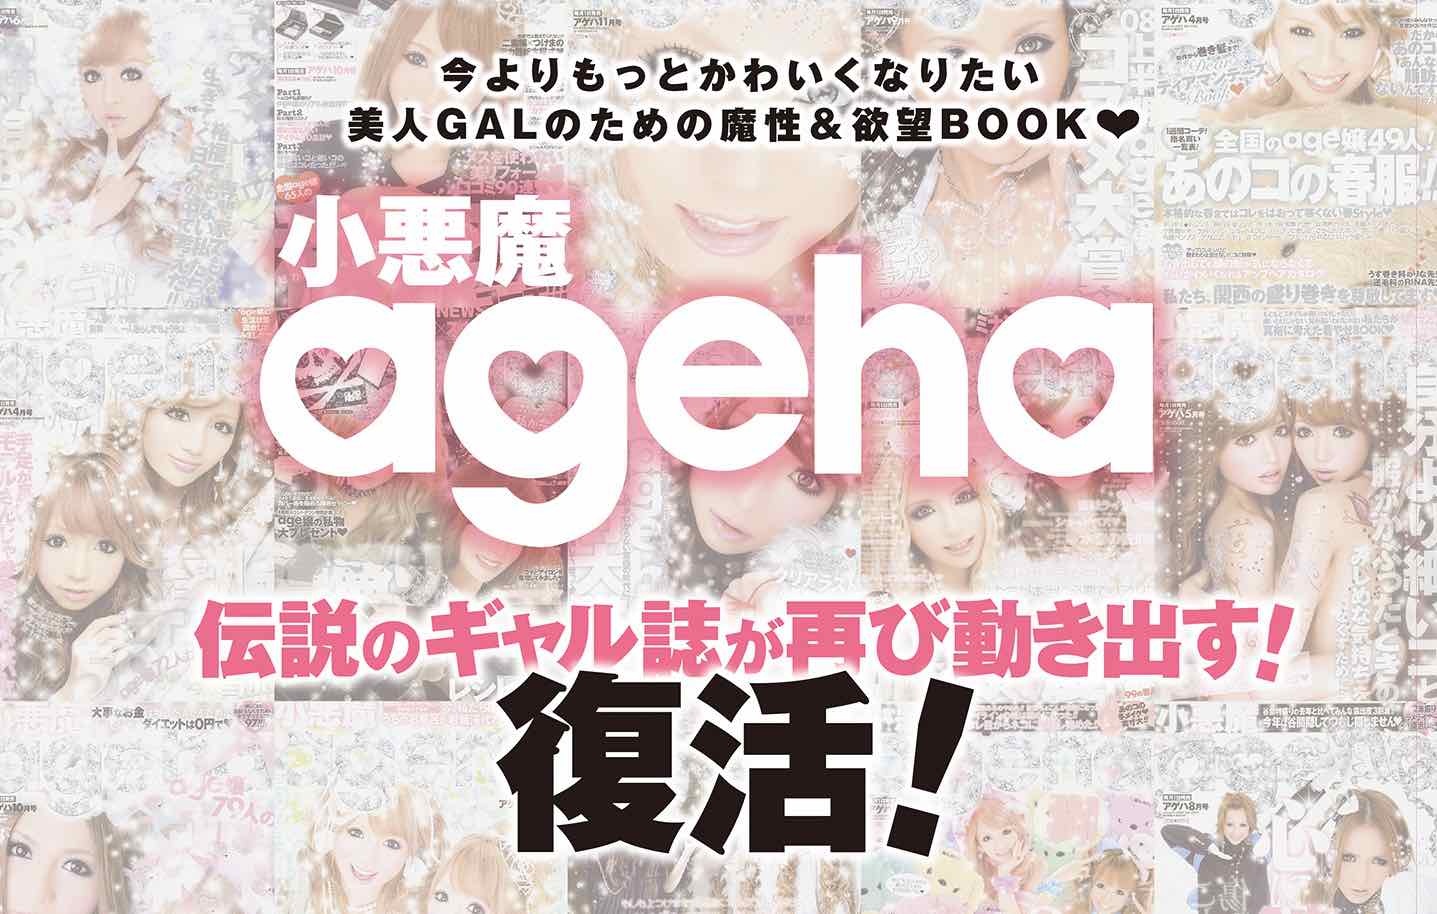 koakuma ageha hostess magazine relaunch memorial book